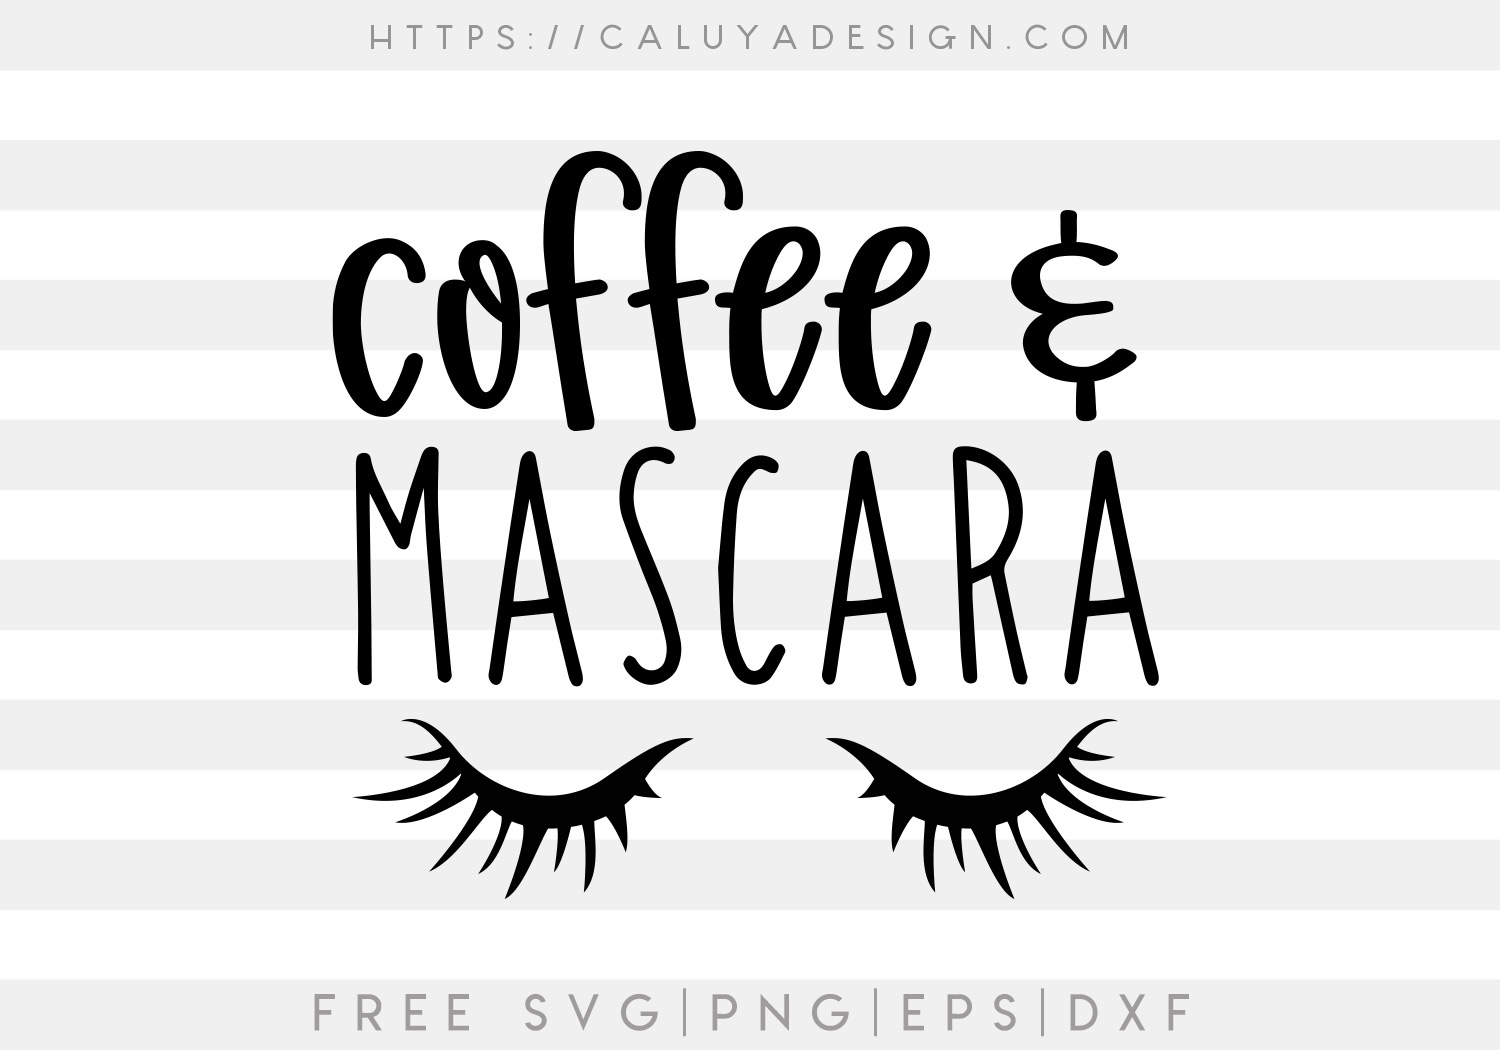 Coffeeandmascara-svg-main